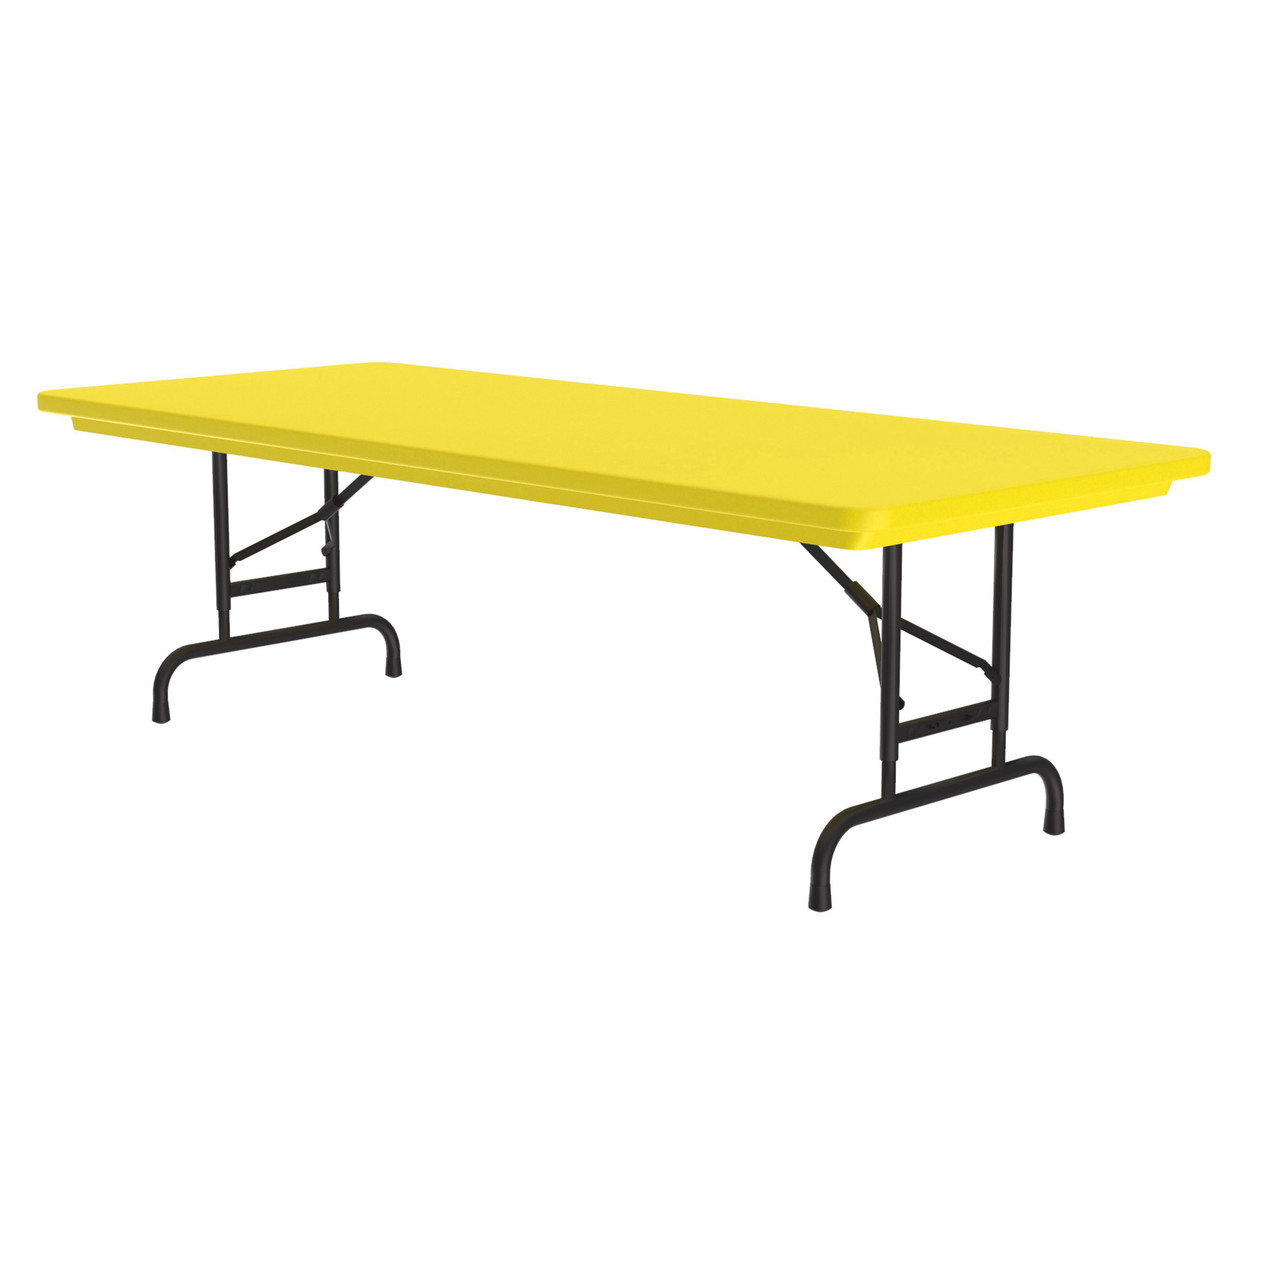 Economy Folding Table - 60 x 30